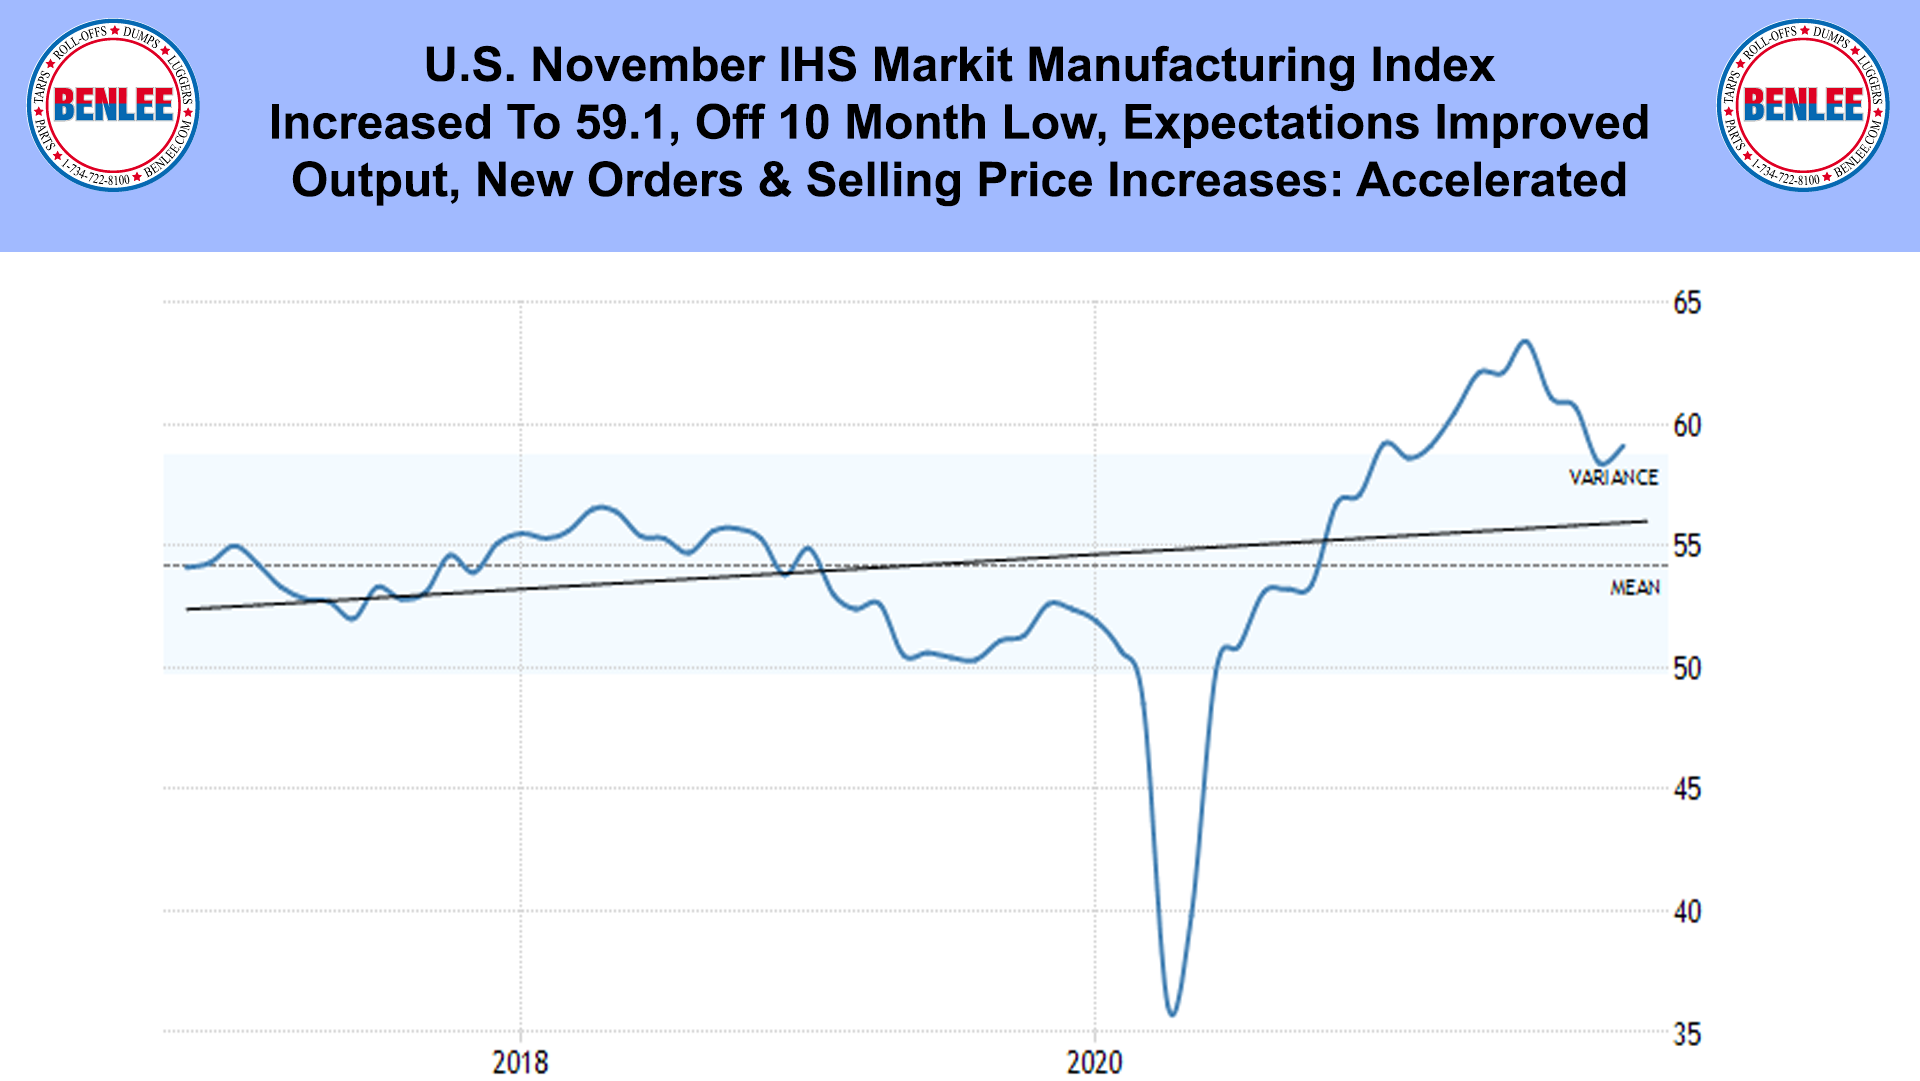 U.S. November IHS Markit Manufacturing Index